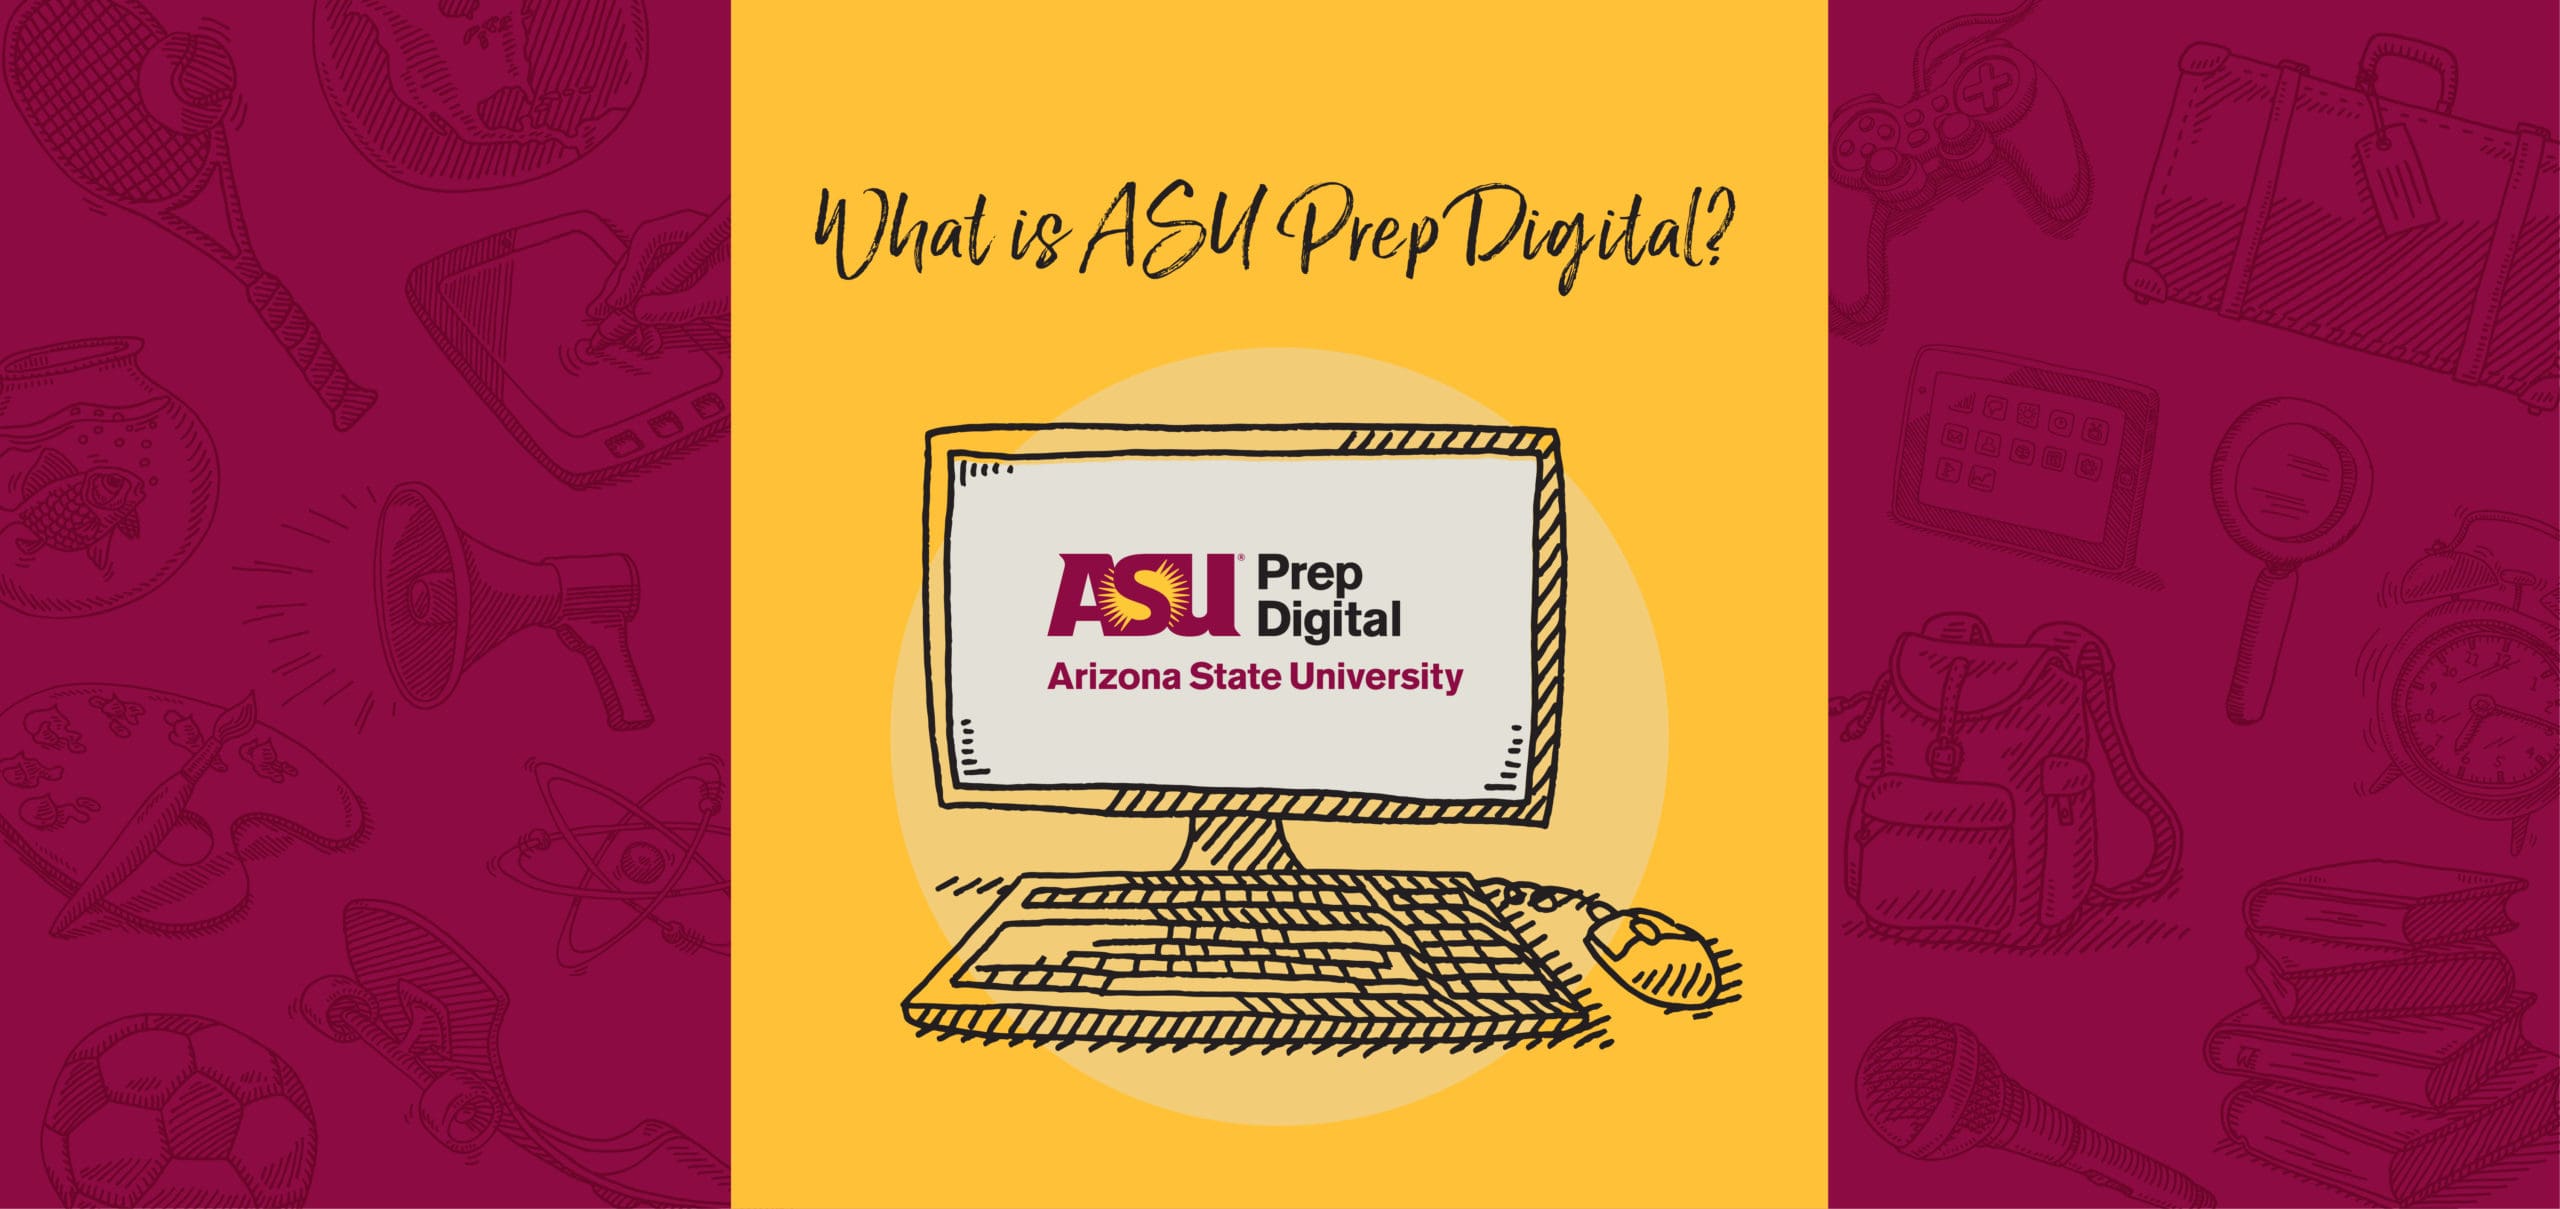 What is ASU Prep Digital? ASU Prep Digital